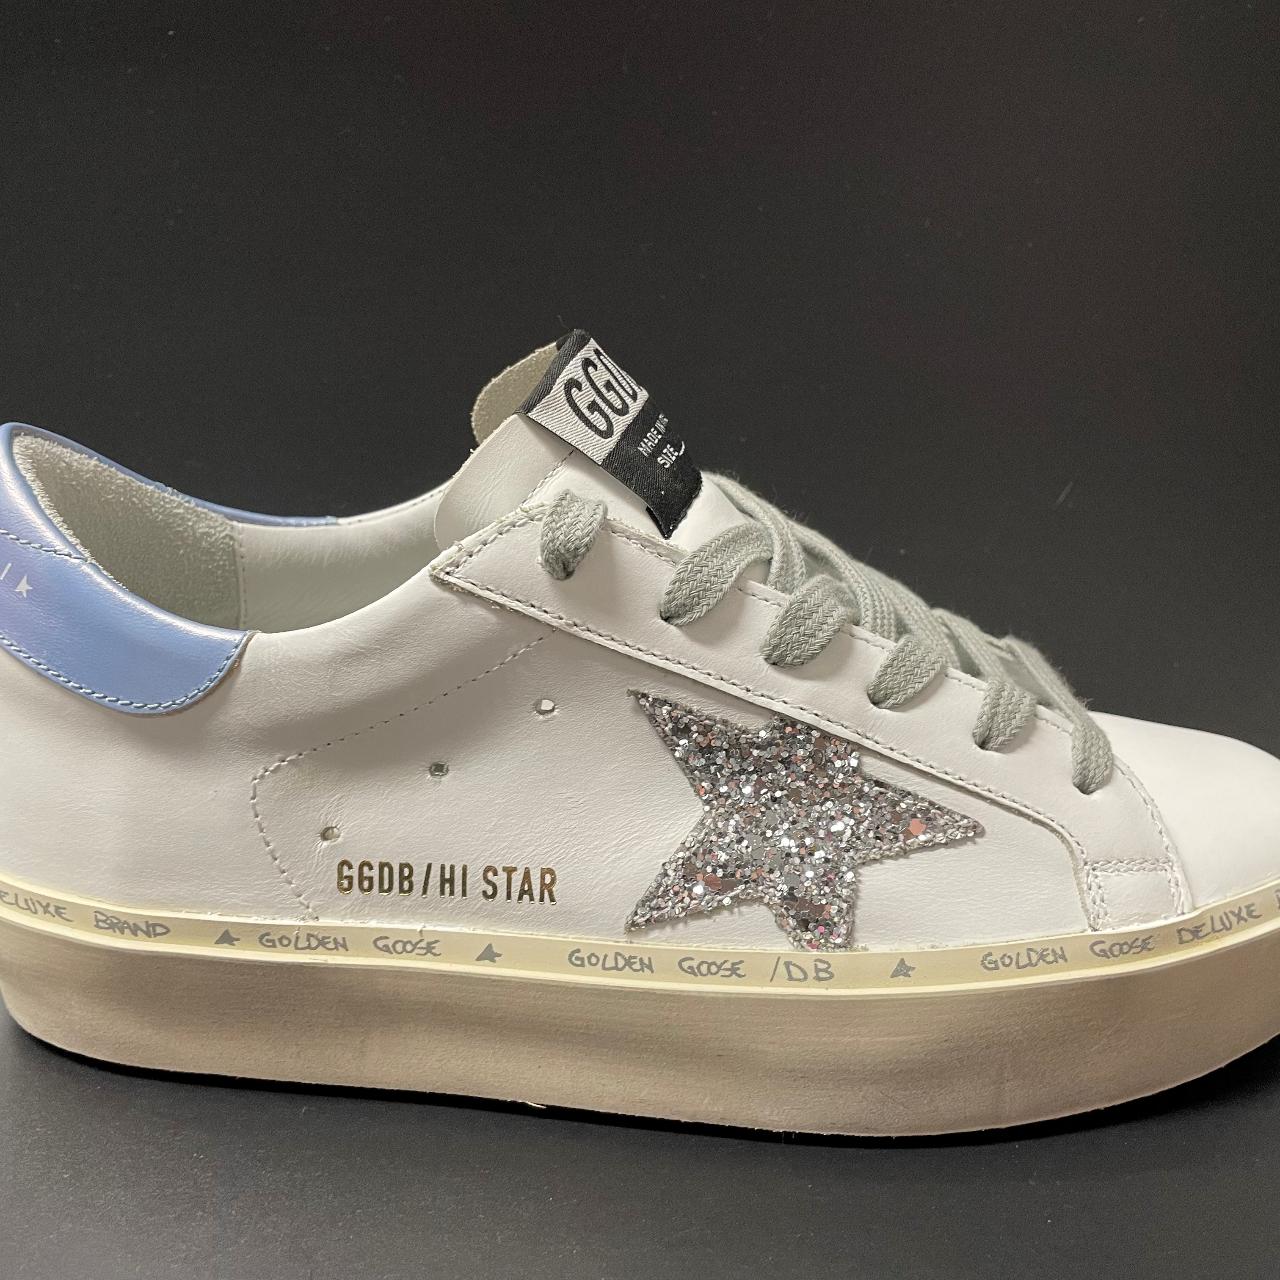 The Hi Star Sneakers in White / Silver / Sky Blue... - Depop